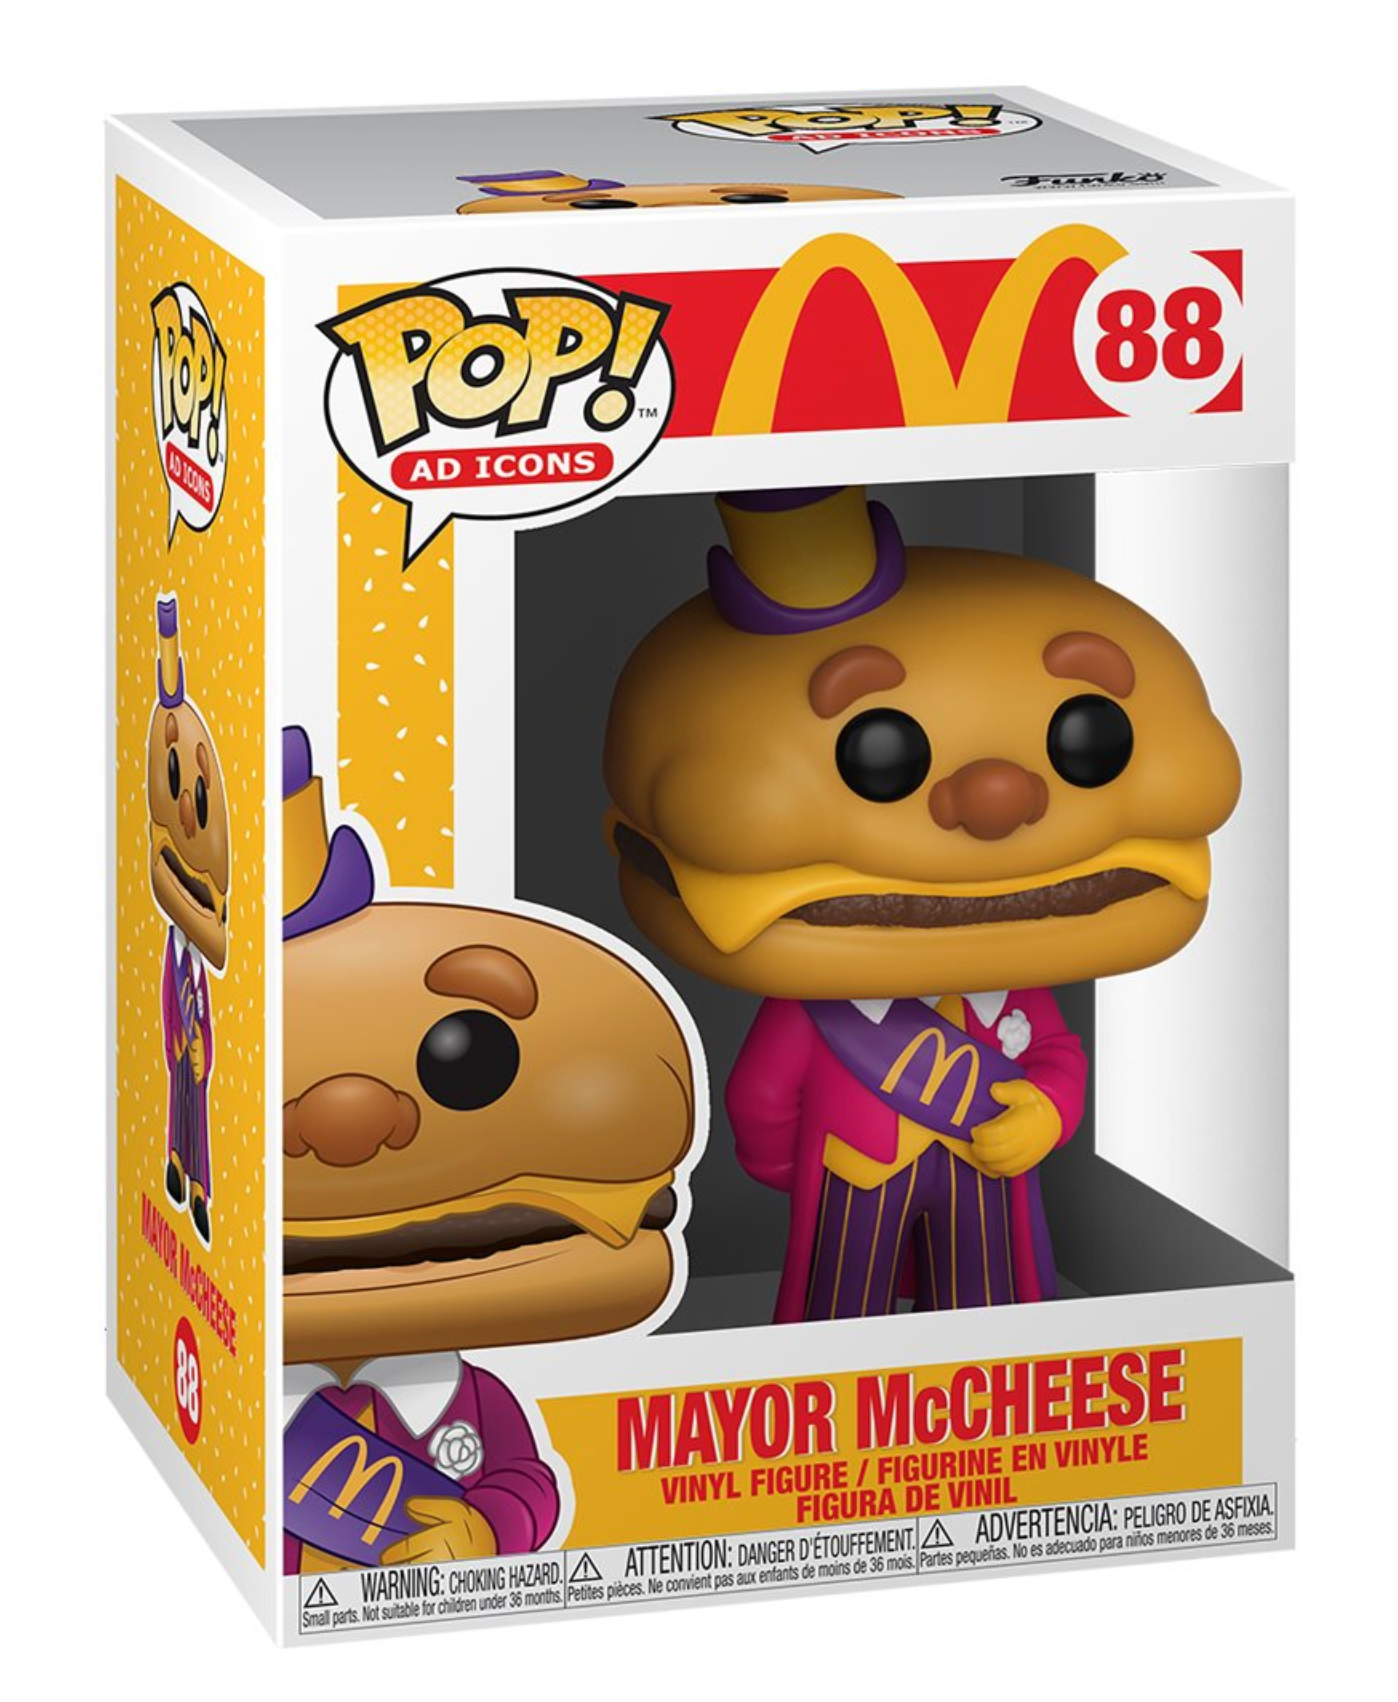 Pop McDonald's Mayor McCheese Vinyl Figure (Other) - image 2 of 2